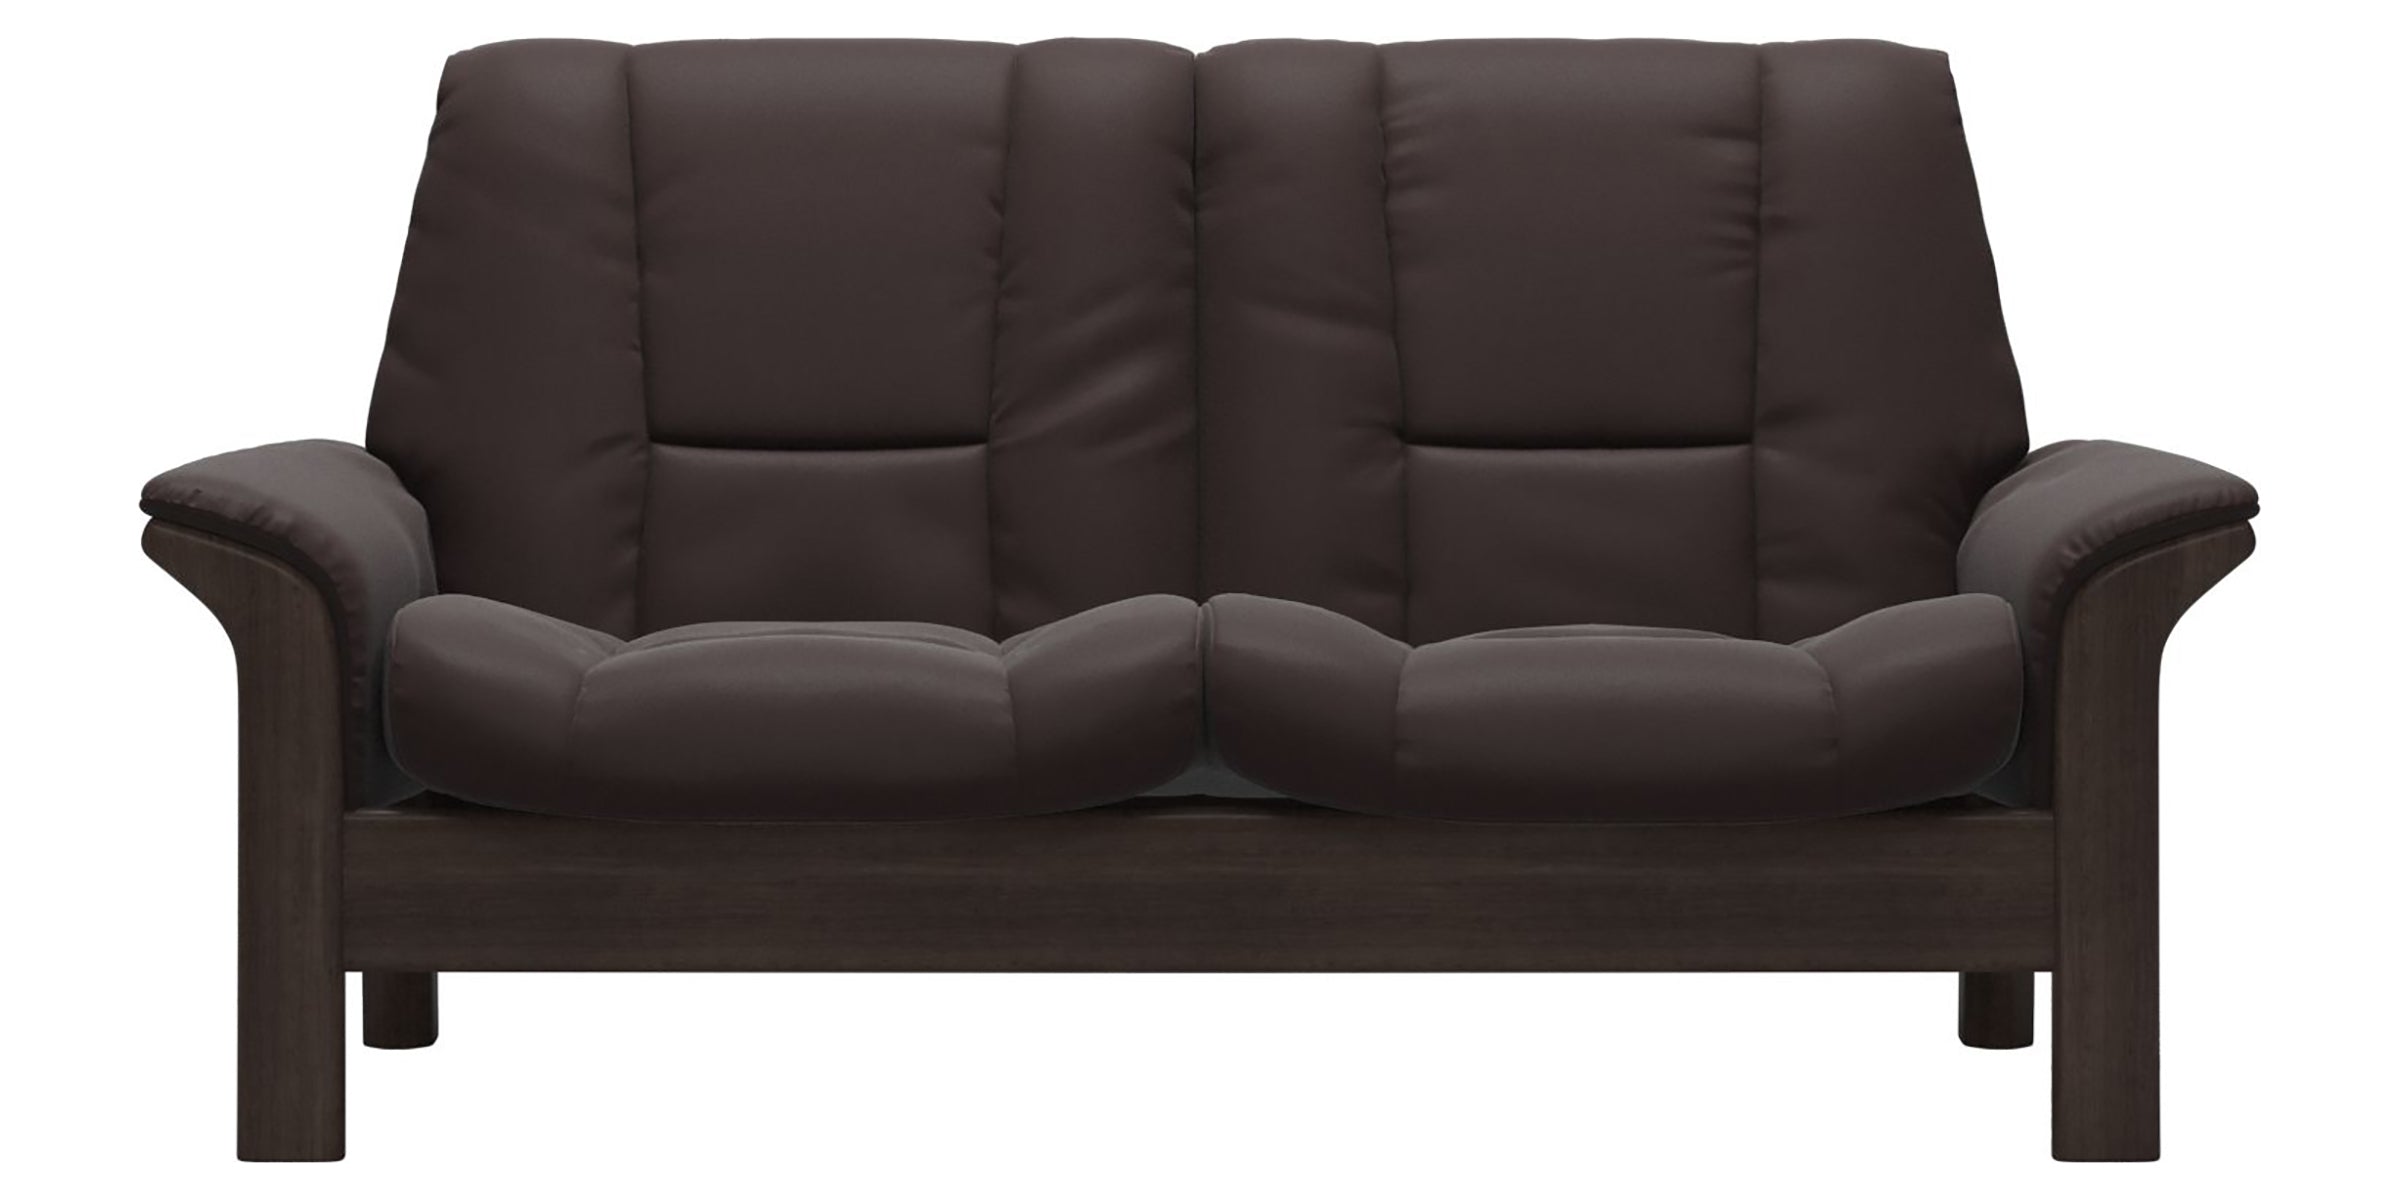 Paloma Leather Chocolate and Wenge Base | Stressless Buckingham 2-Seater Low Back Sofa | Valley Ridge Furniture